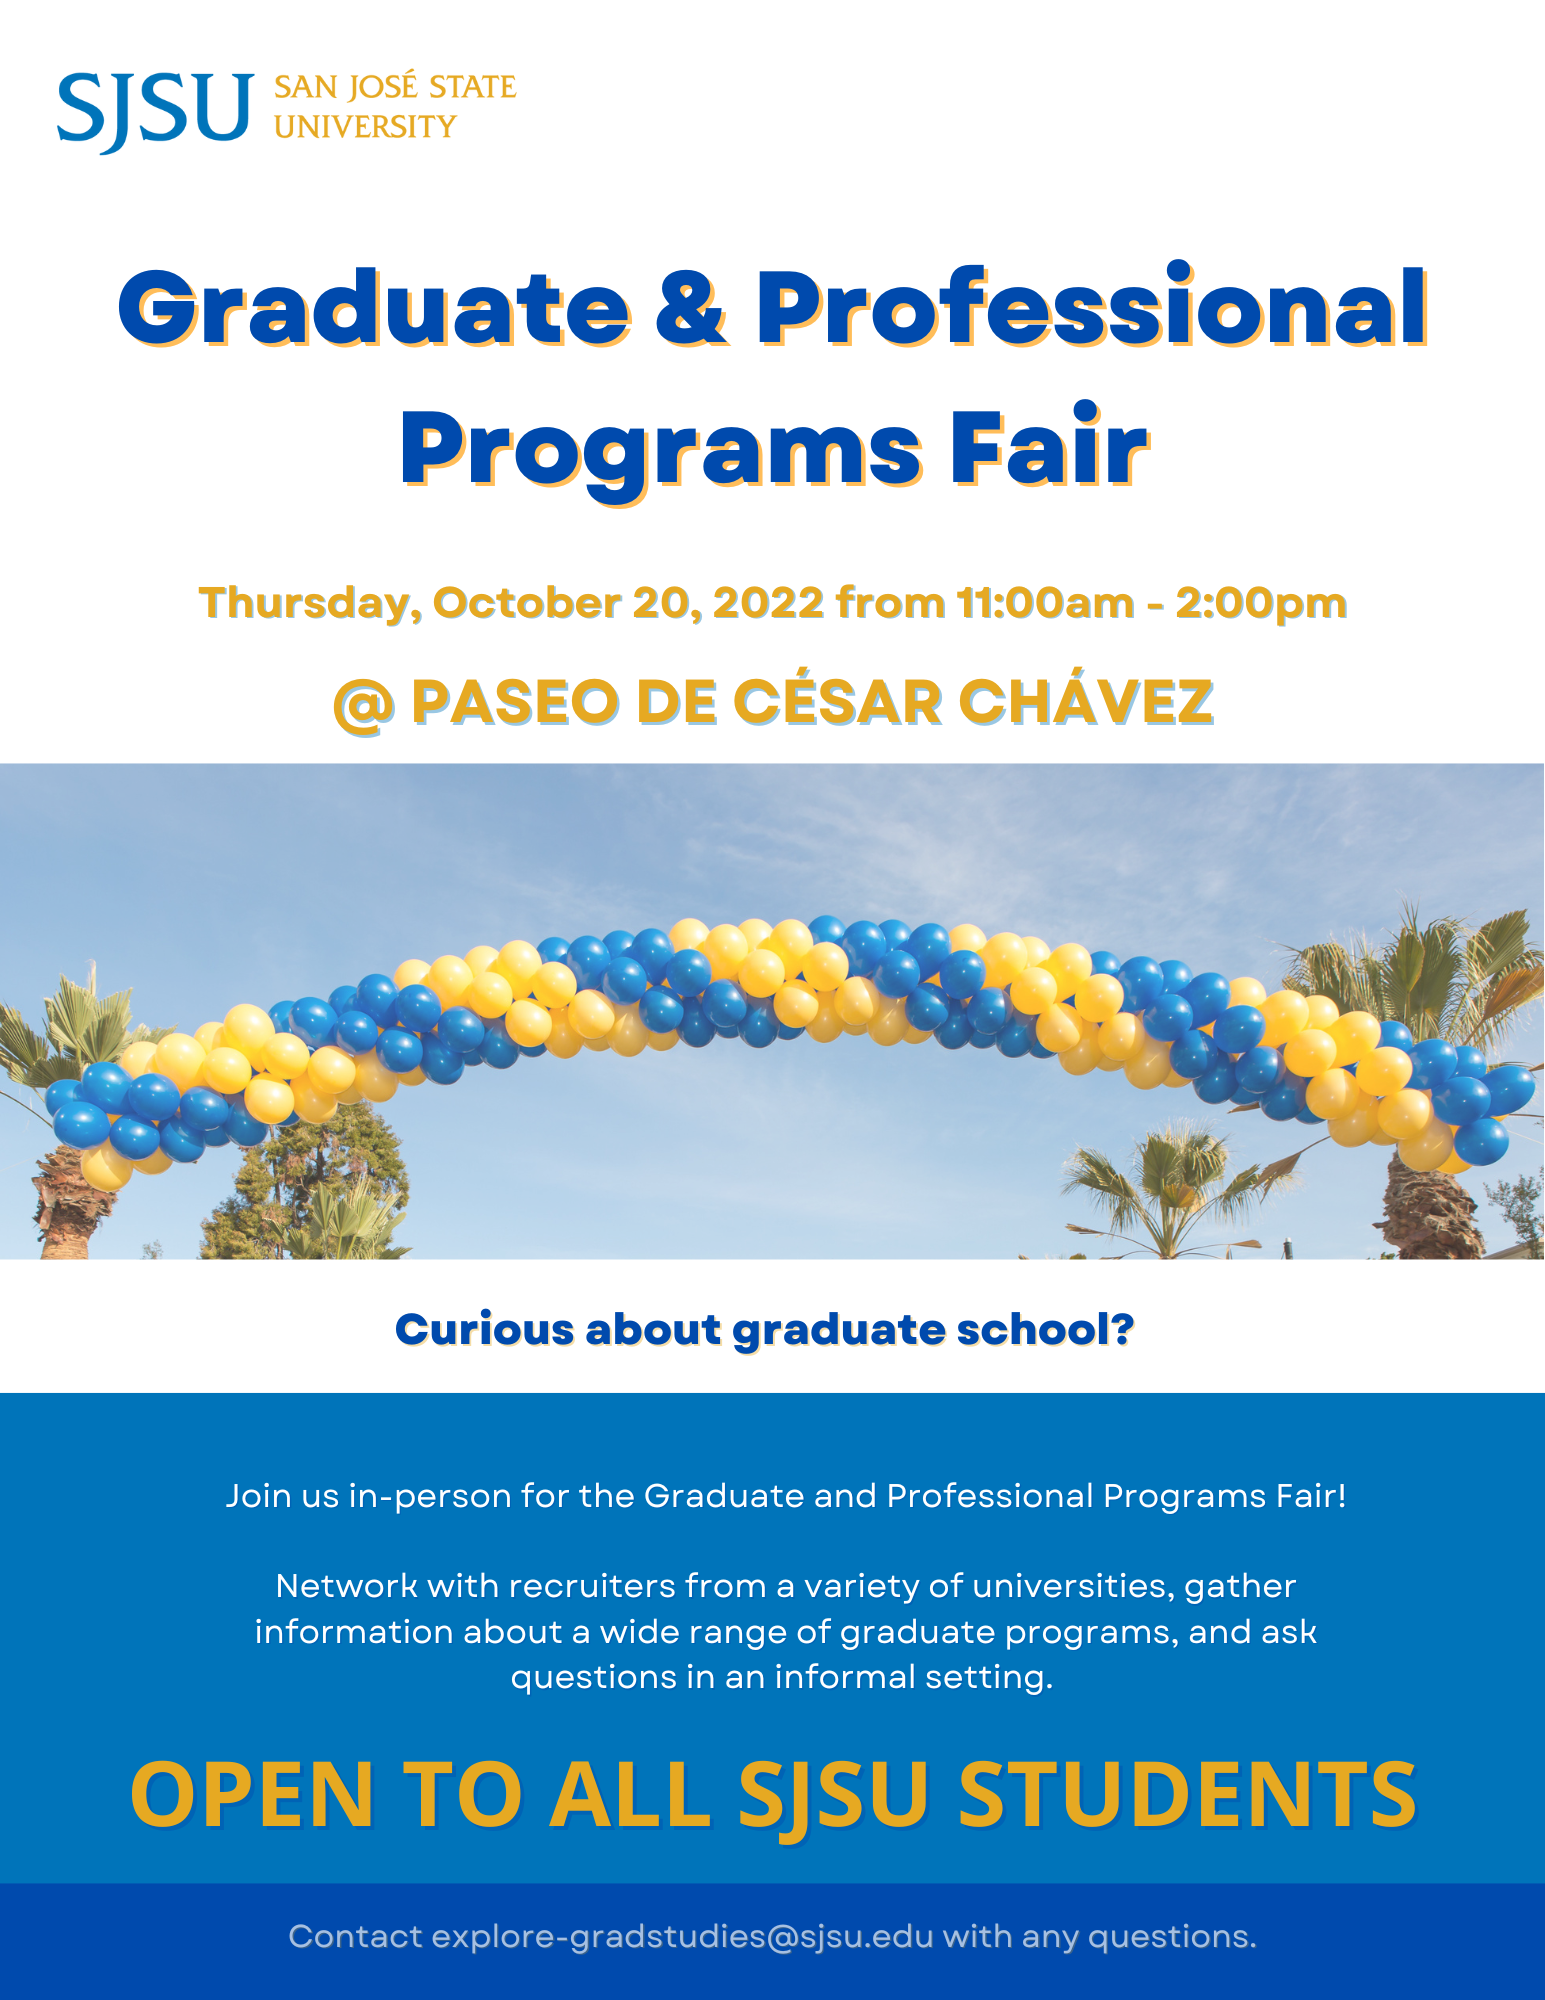 A graphic for the department's graduate programs fair. It is Thursday, October 20th, 2022 at Paseo de Cesar Cahvez.